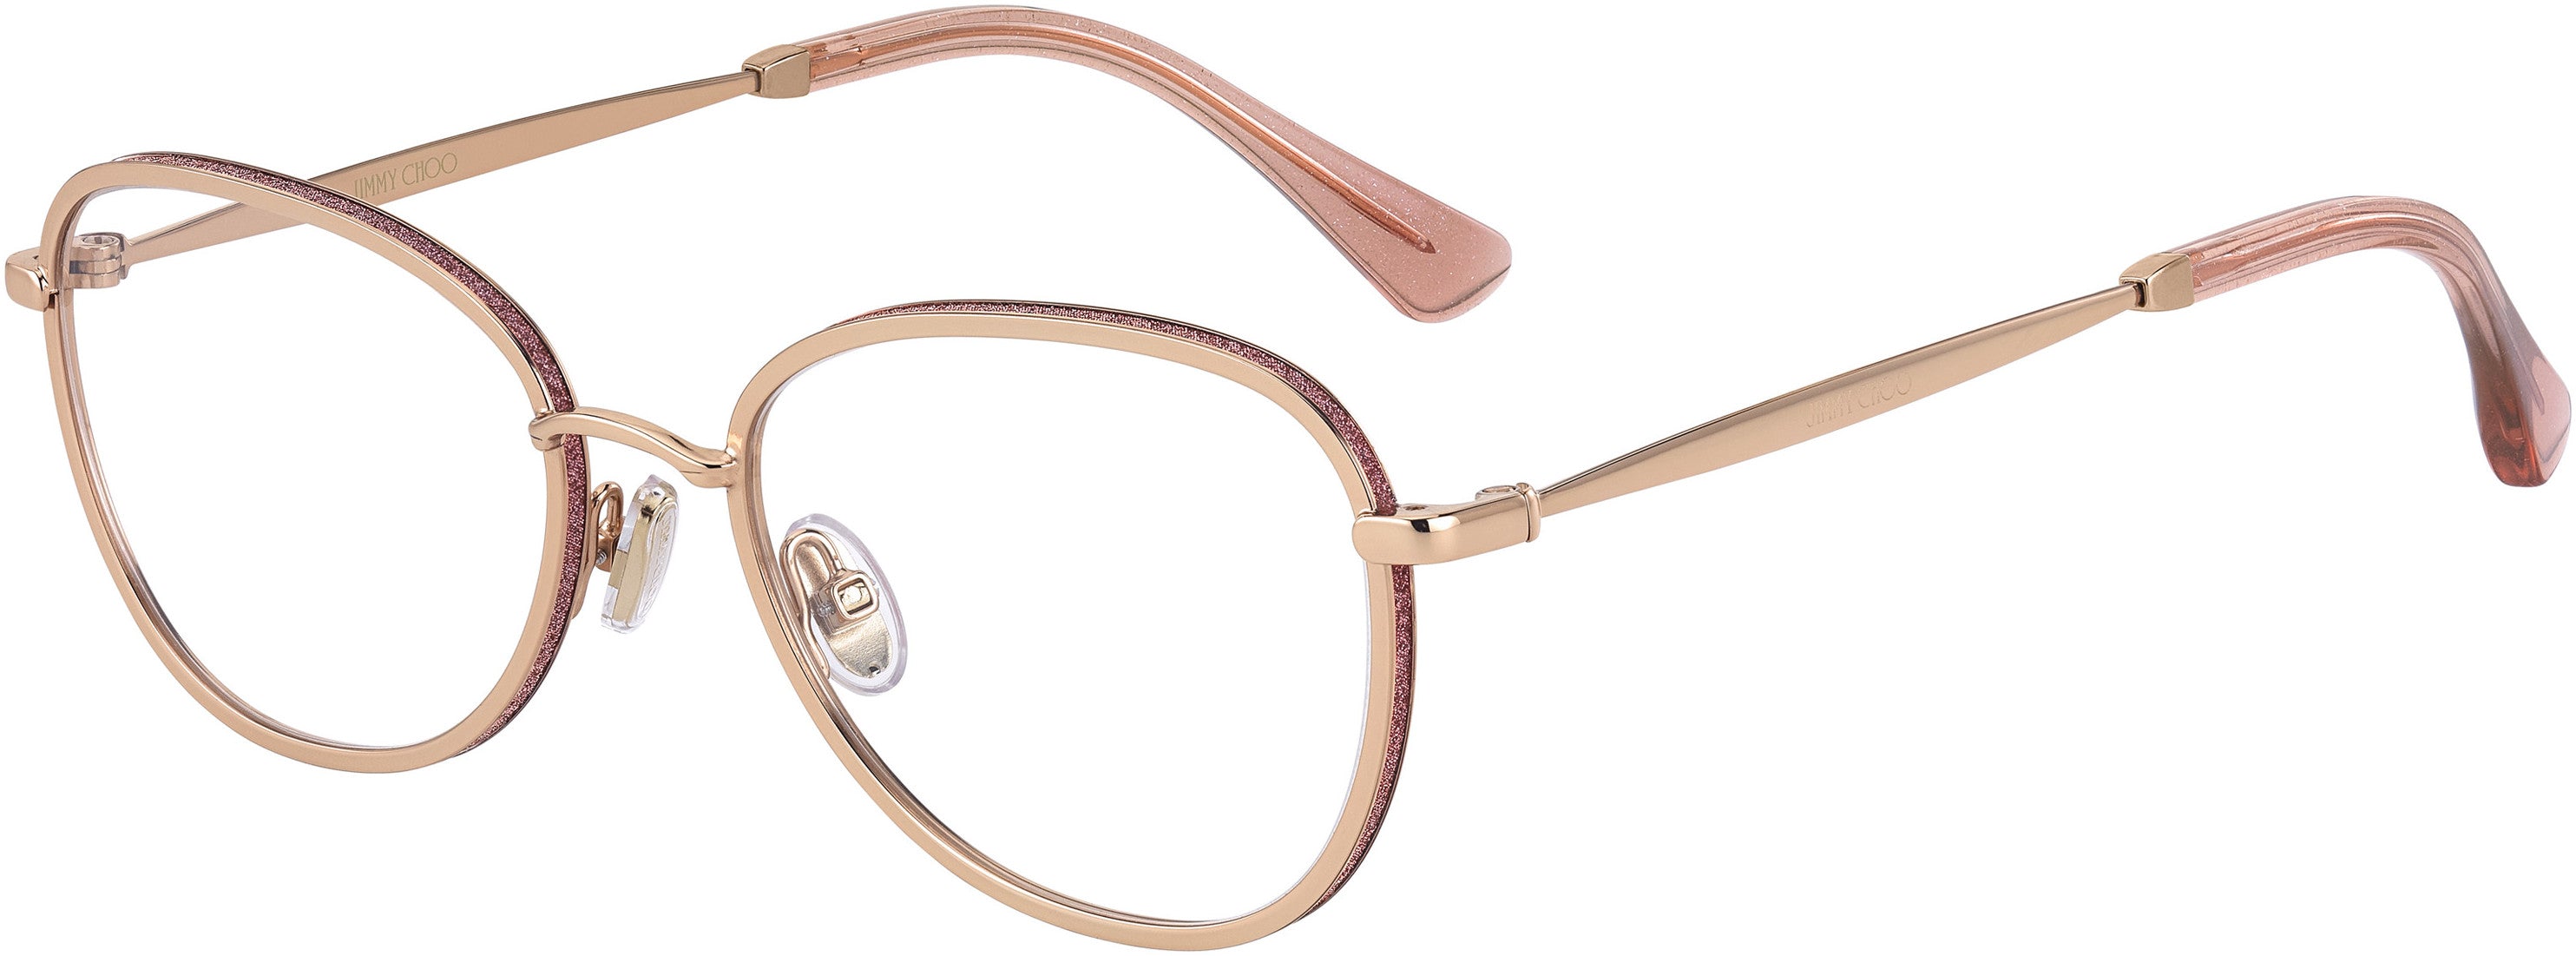  Jimmy Choo 229 Oval Modified Eyeglasses 0EYR-0EYR  Gold Pink (00 Demo Lens)